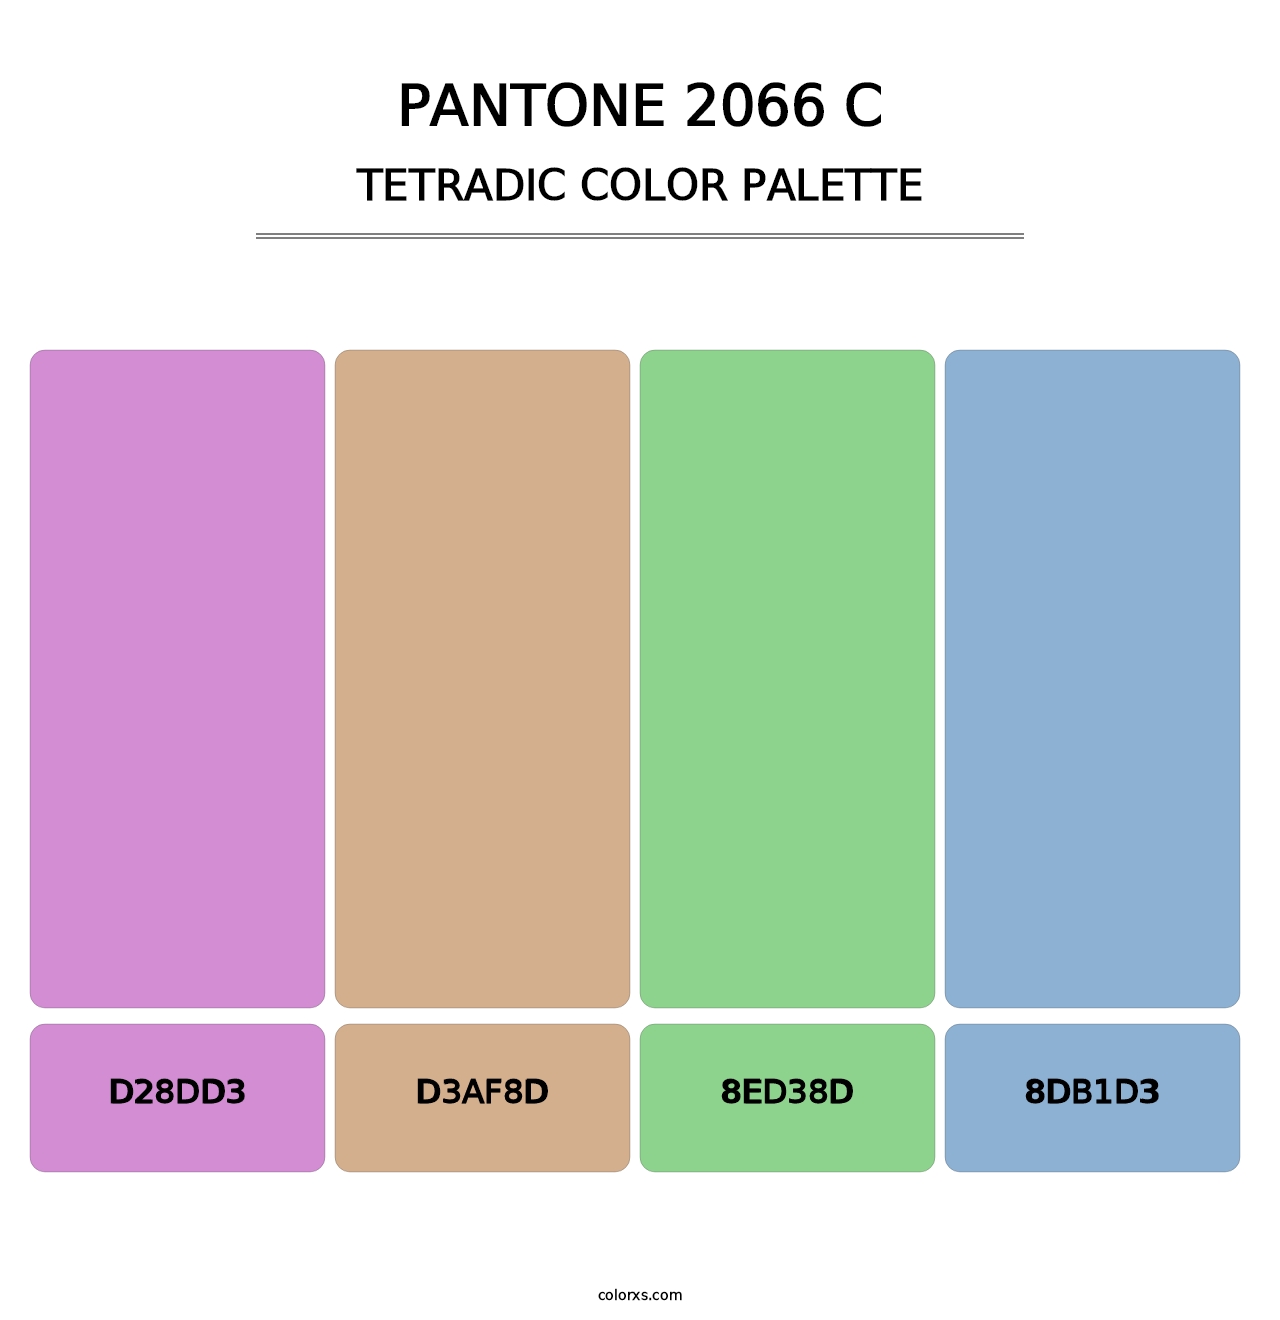 PANTONE 2066 C - Tetradic Color Palette